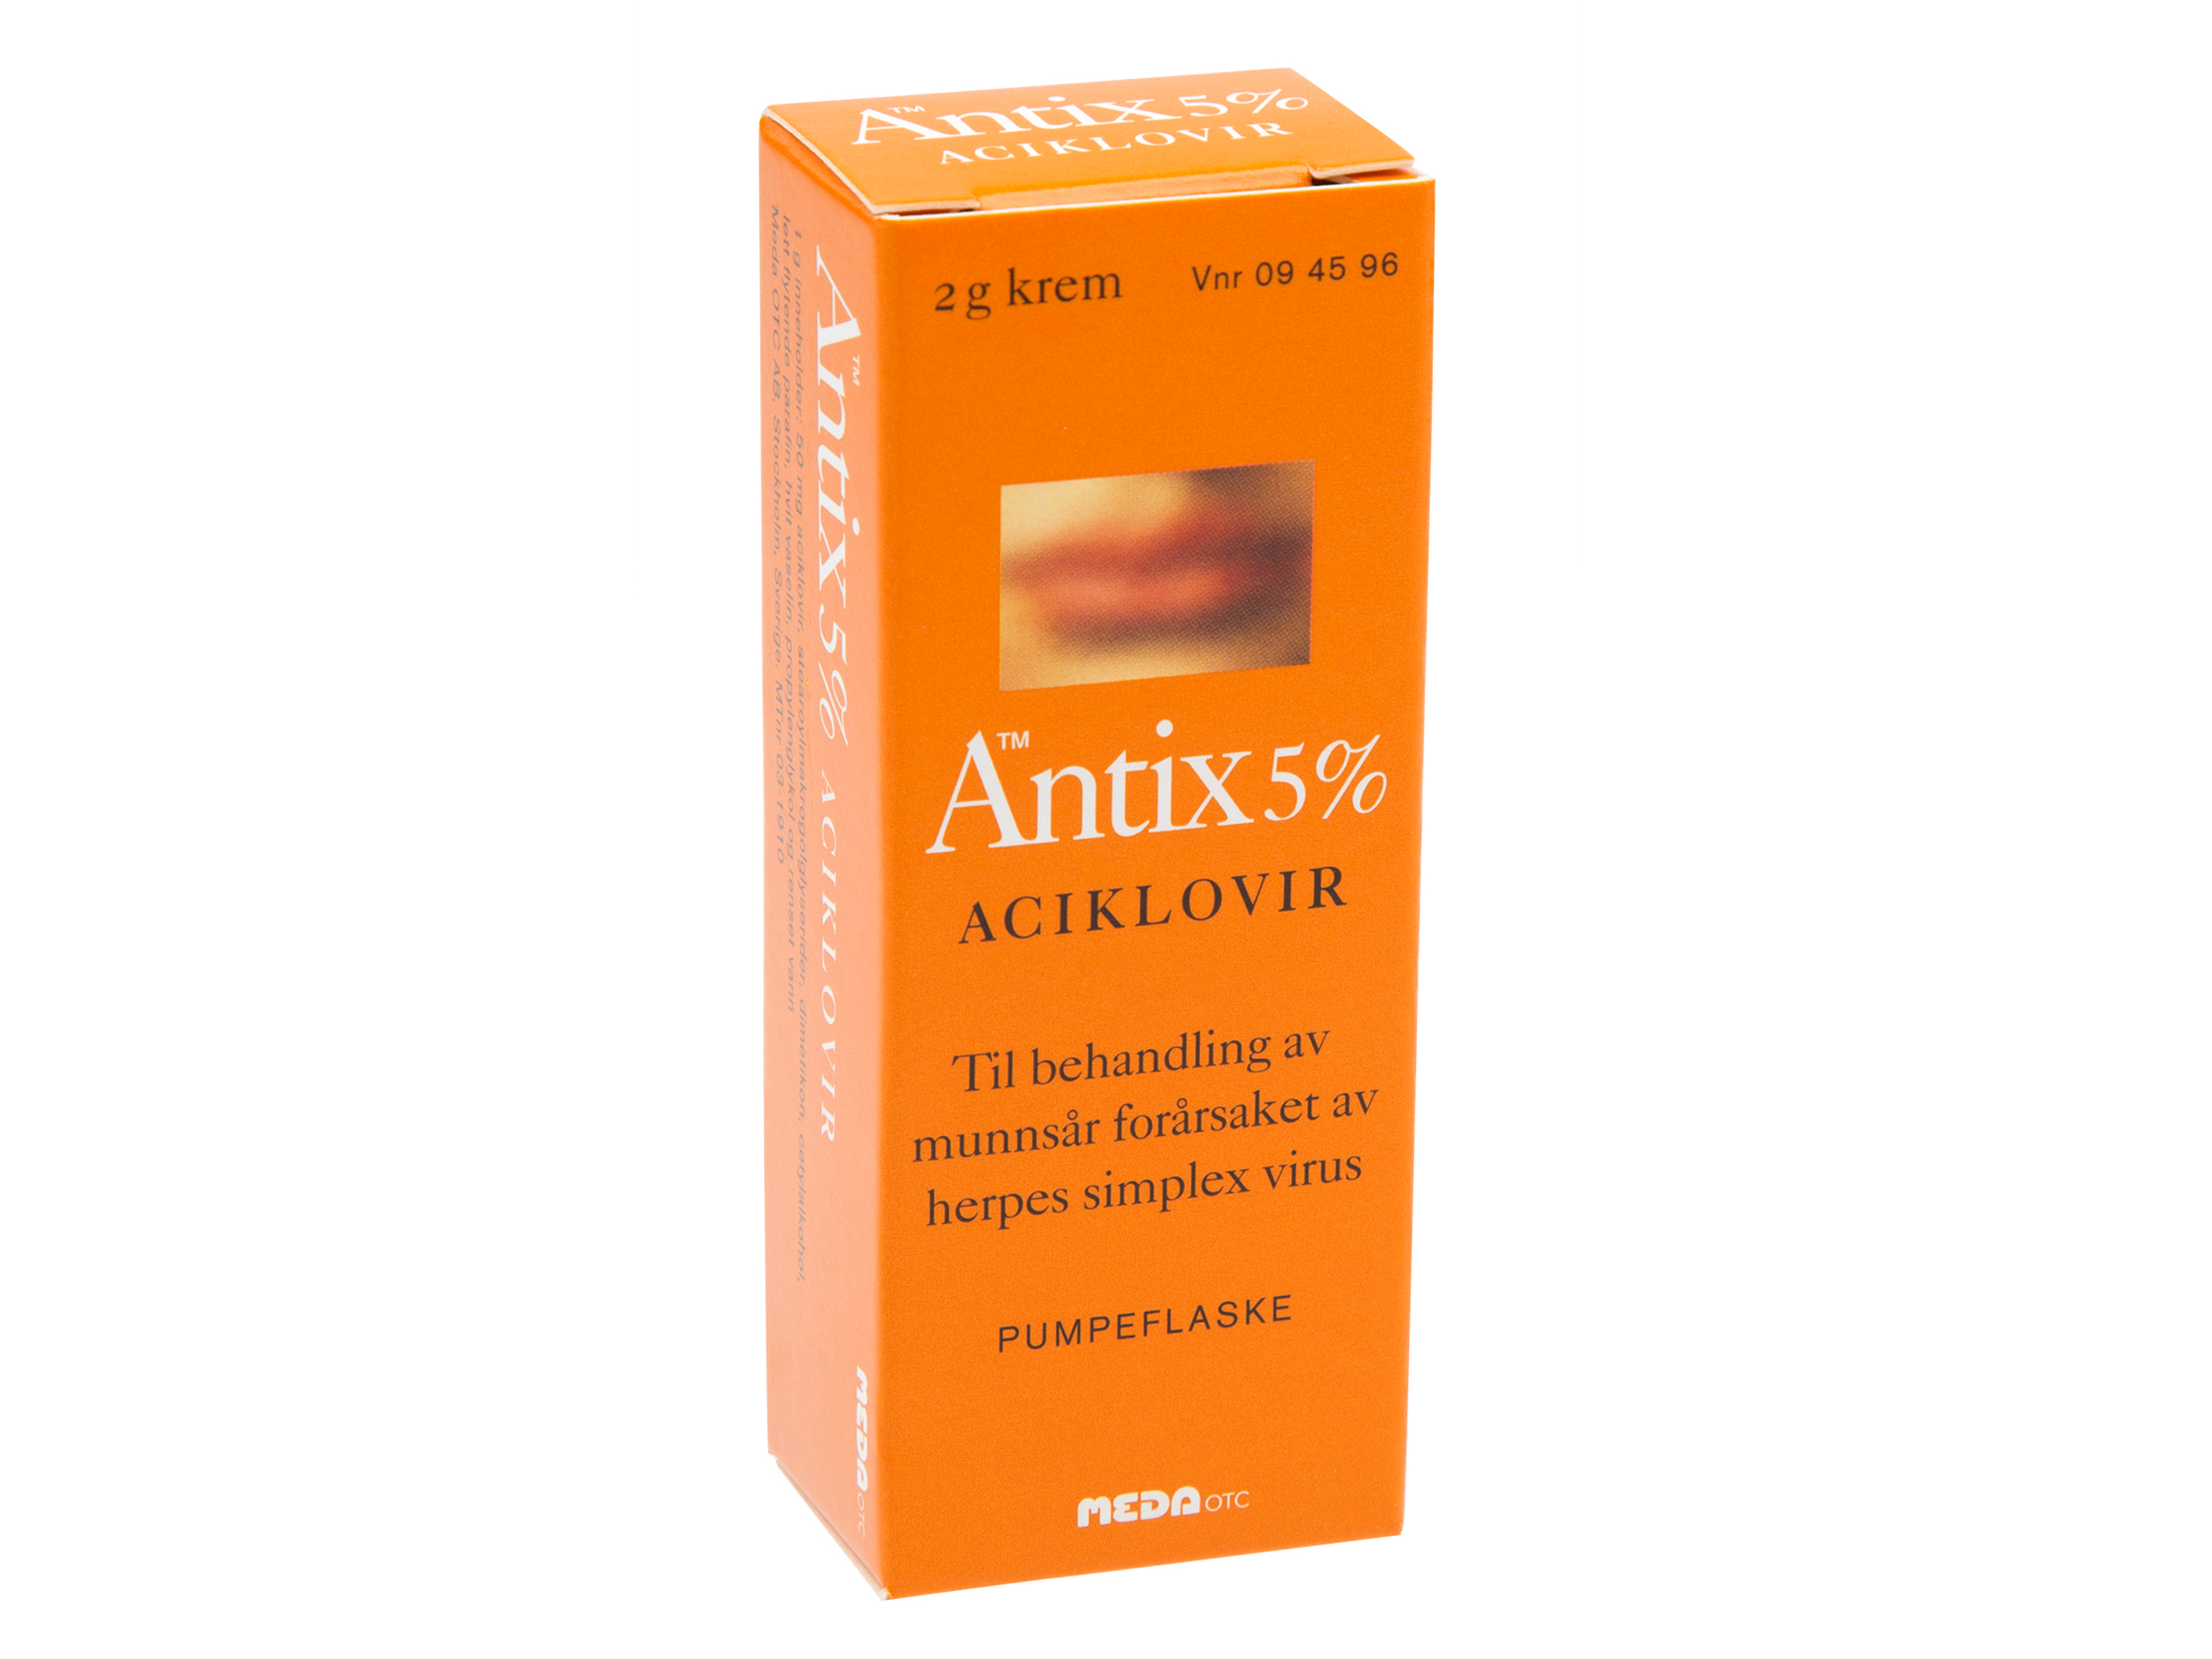 Antix Krem 5% pumpeflaske, 2 gram